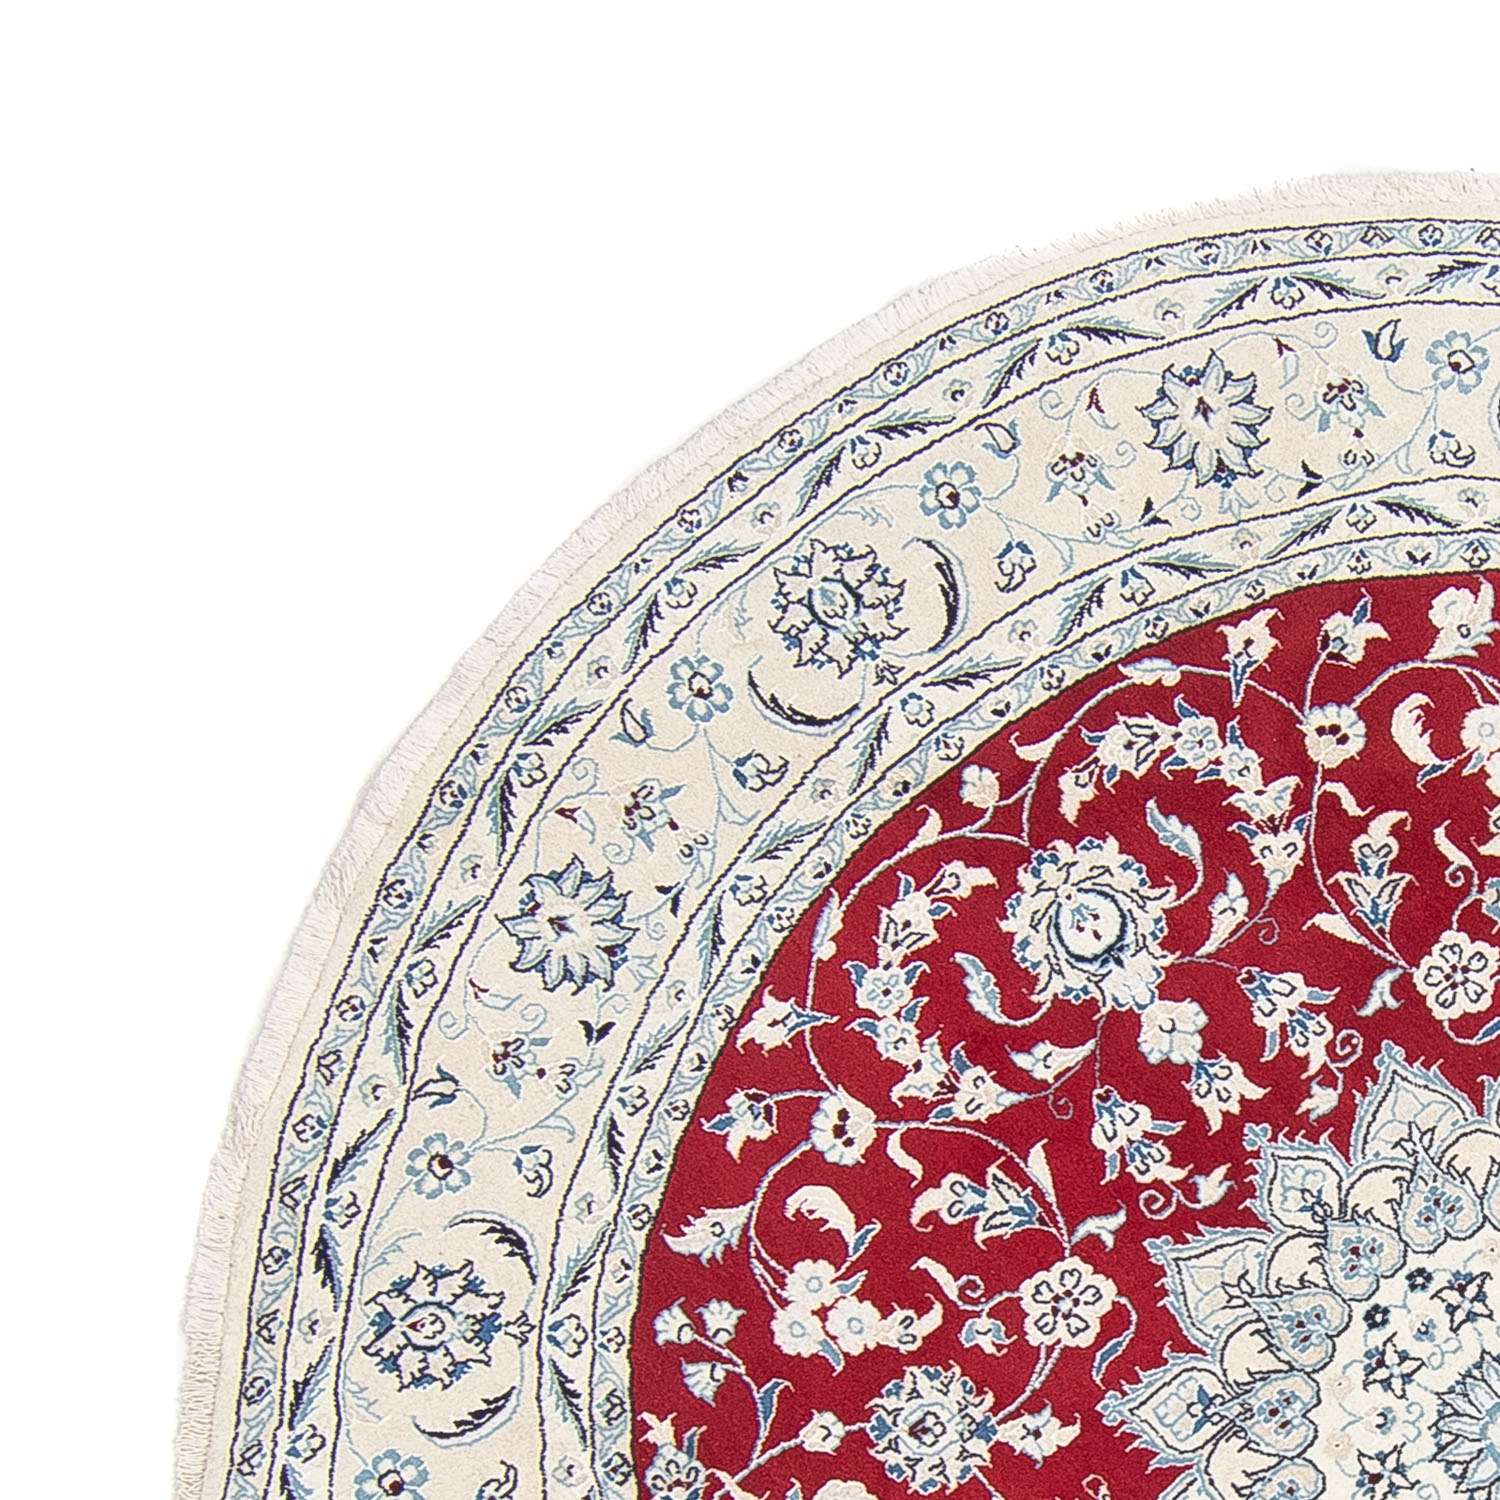 Persisk teppe - Nain rundt  - 250 x 250 cm - mørk rød